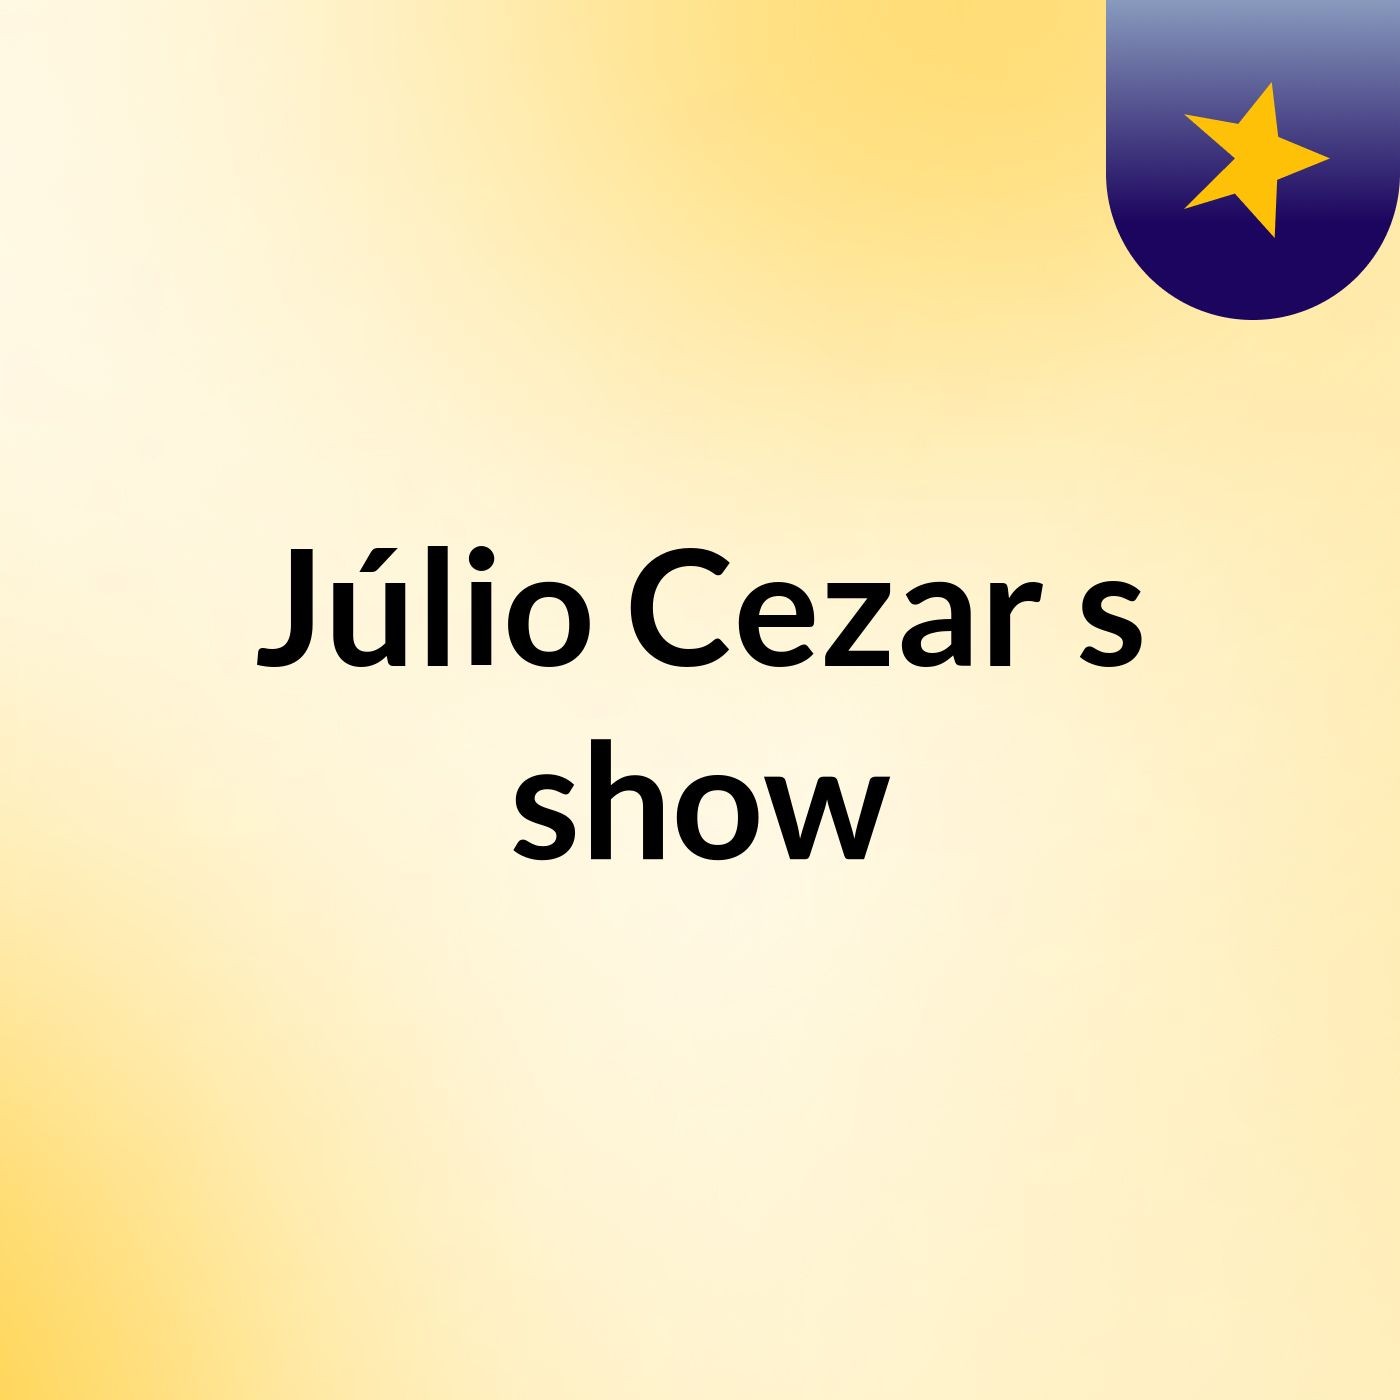 Júlio Cezar's show